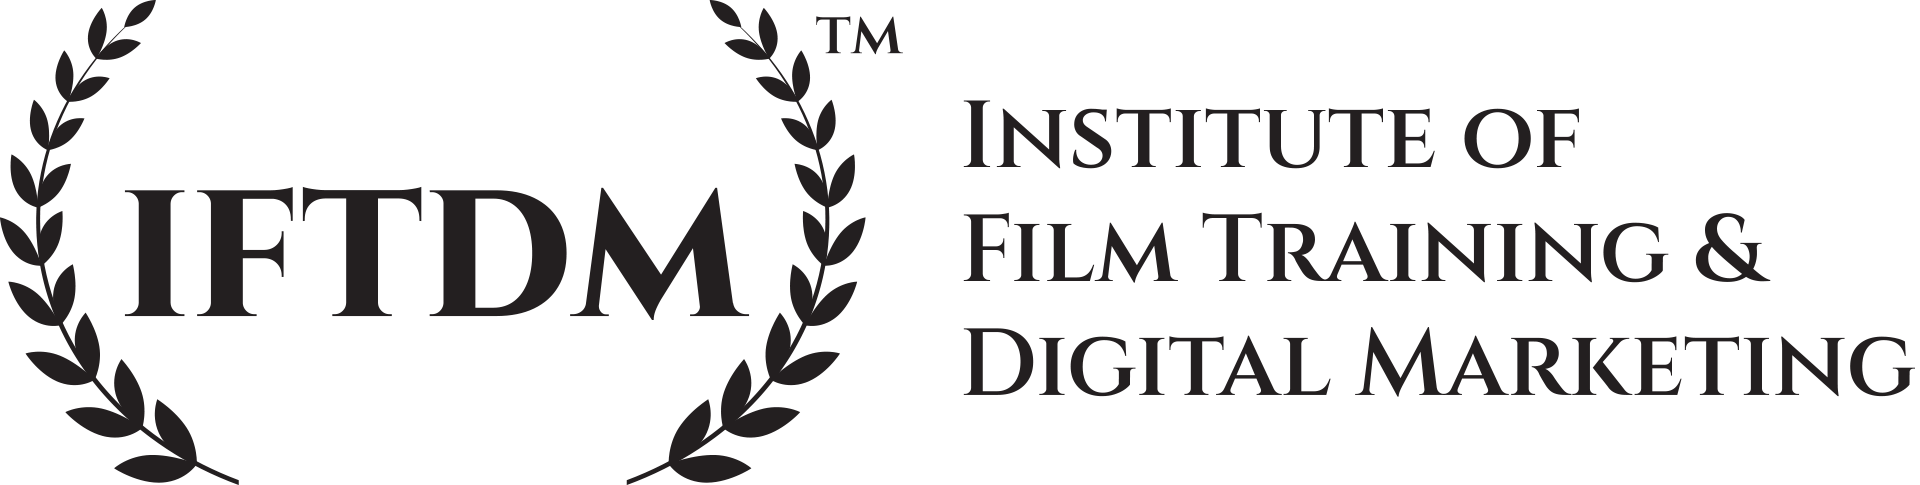 iftdm-logo-highres